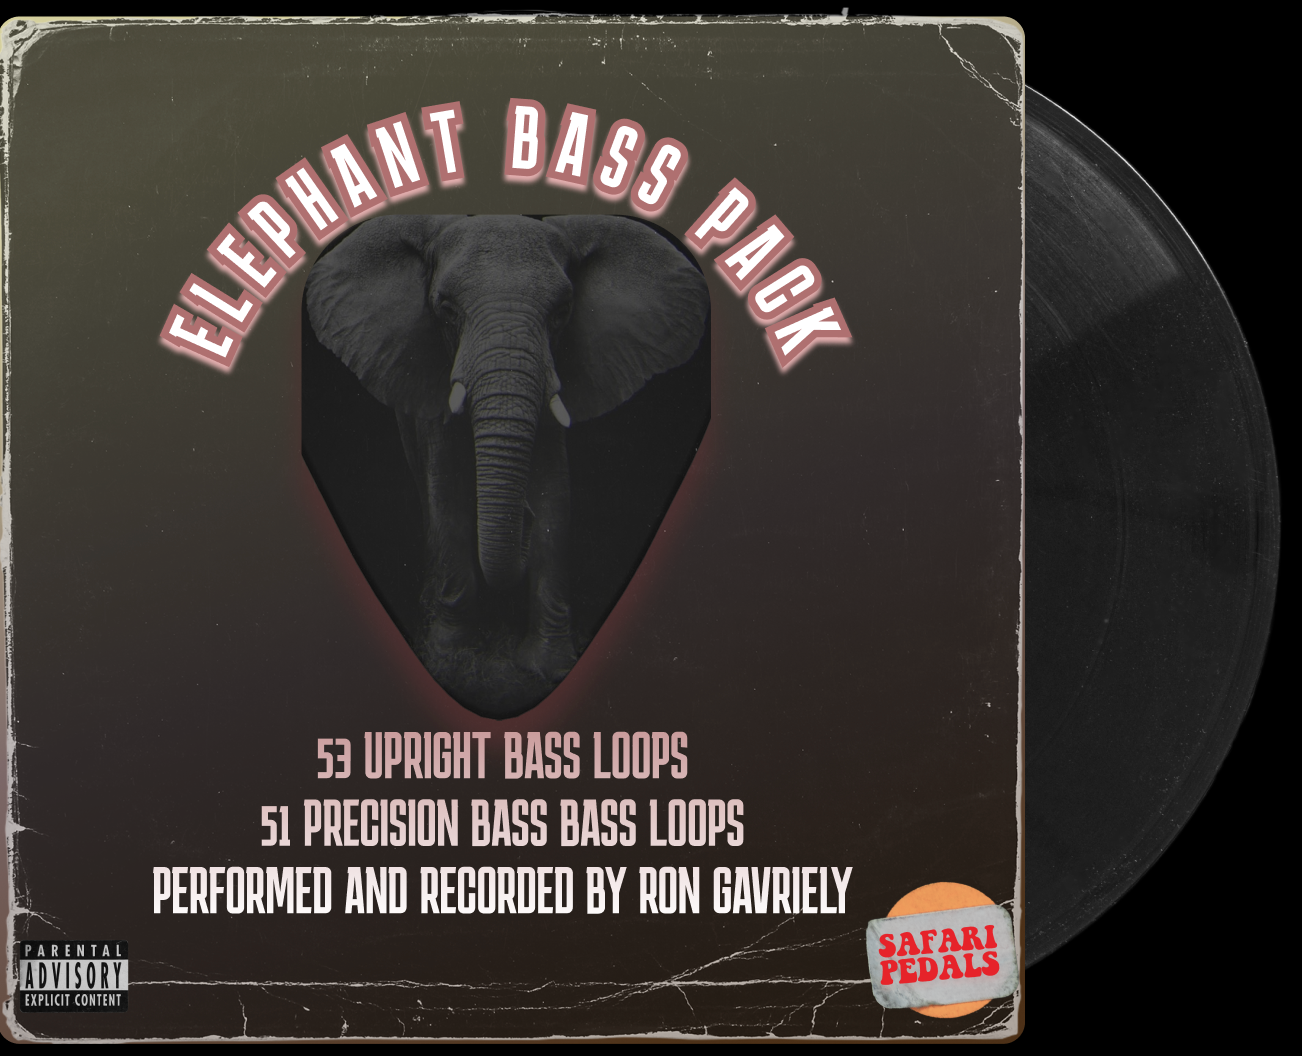 Elephant bass pack - Animal Pack 003